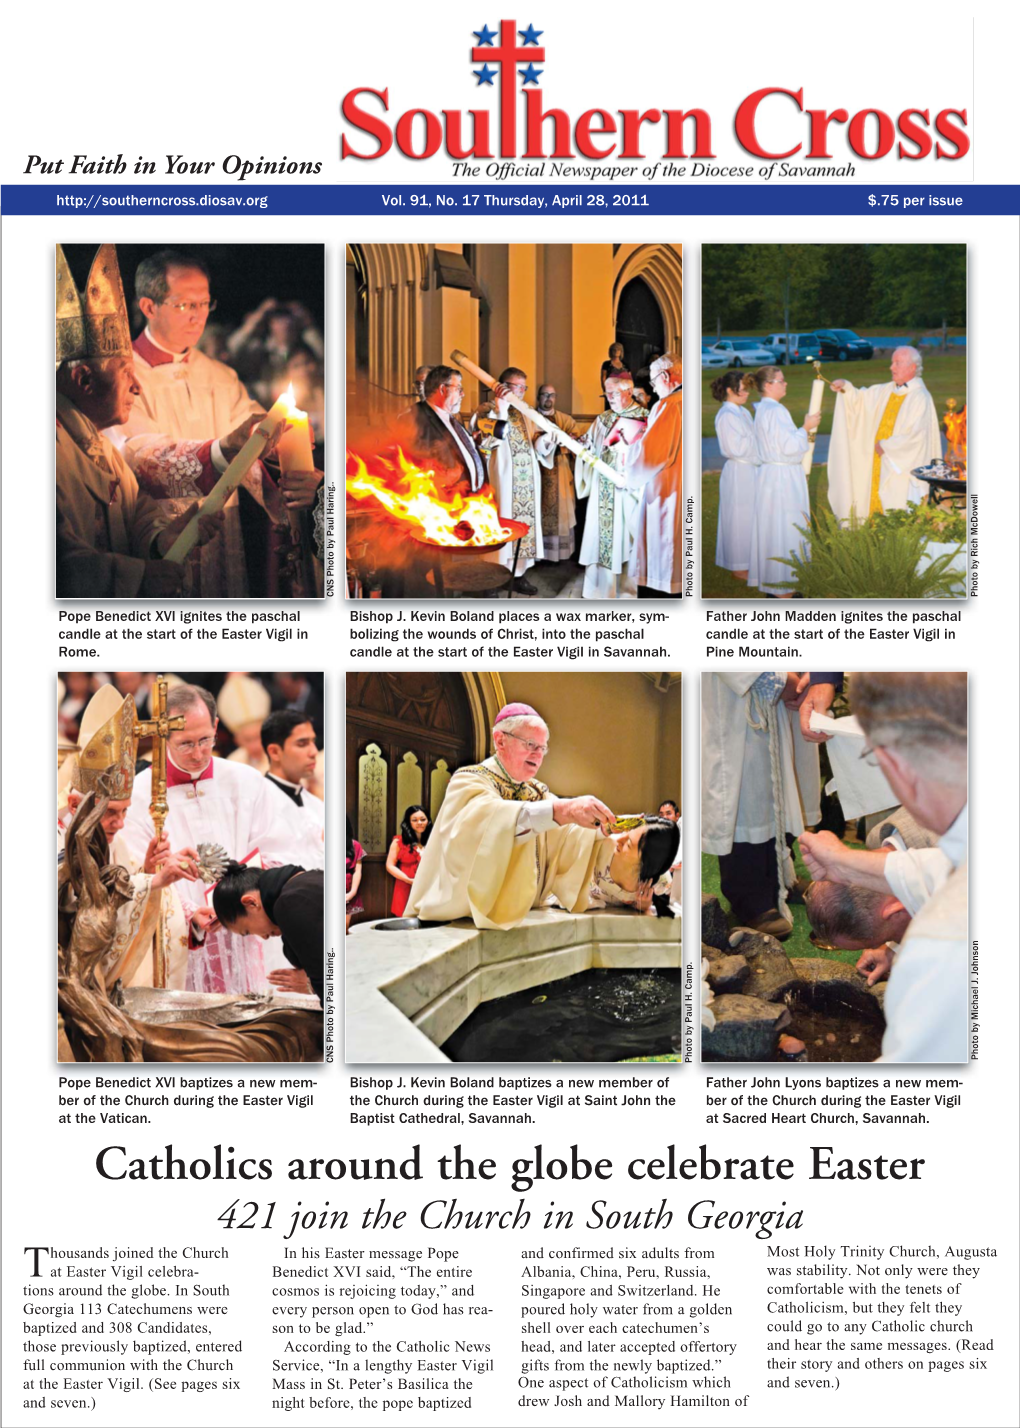 Catholics Around the Globe Celebrate Easter